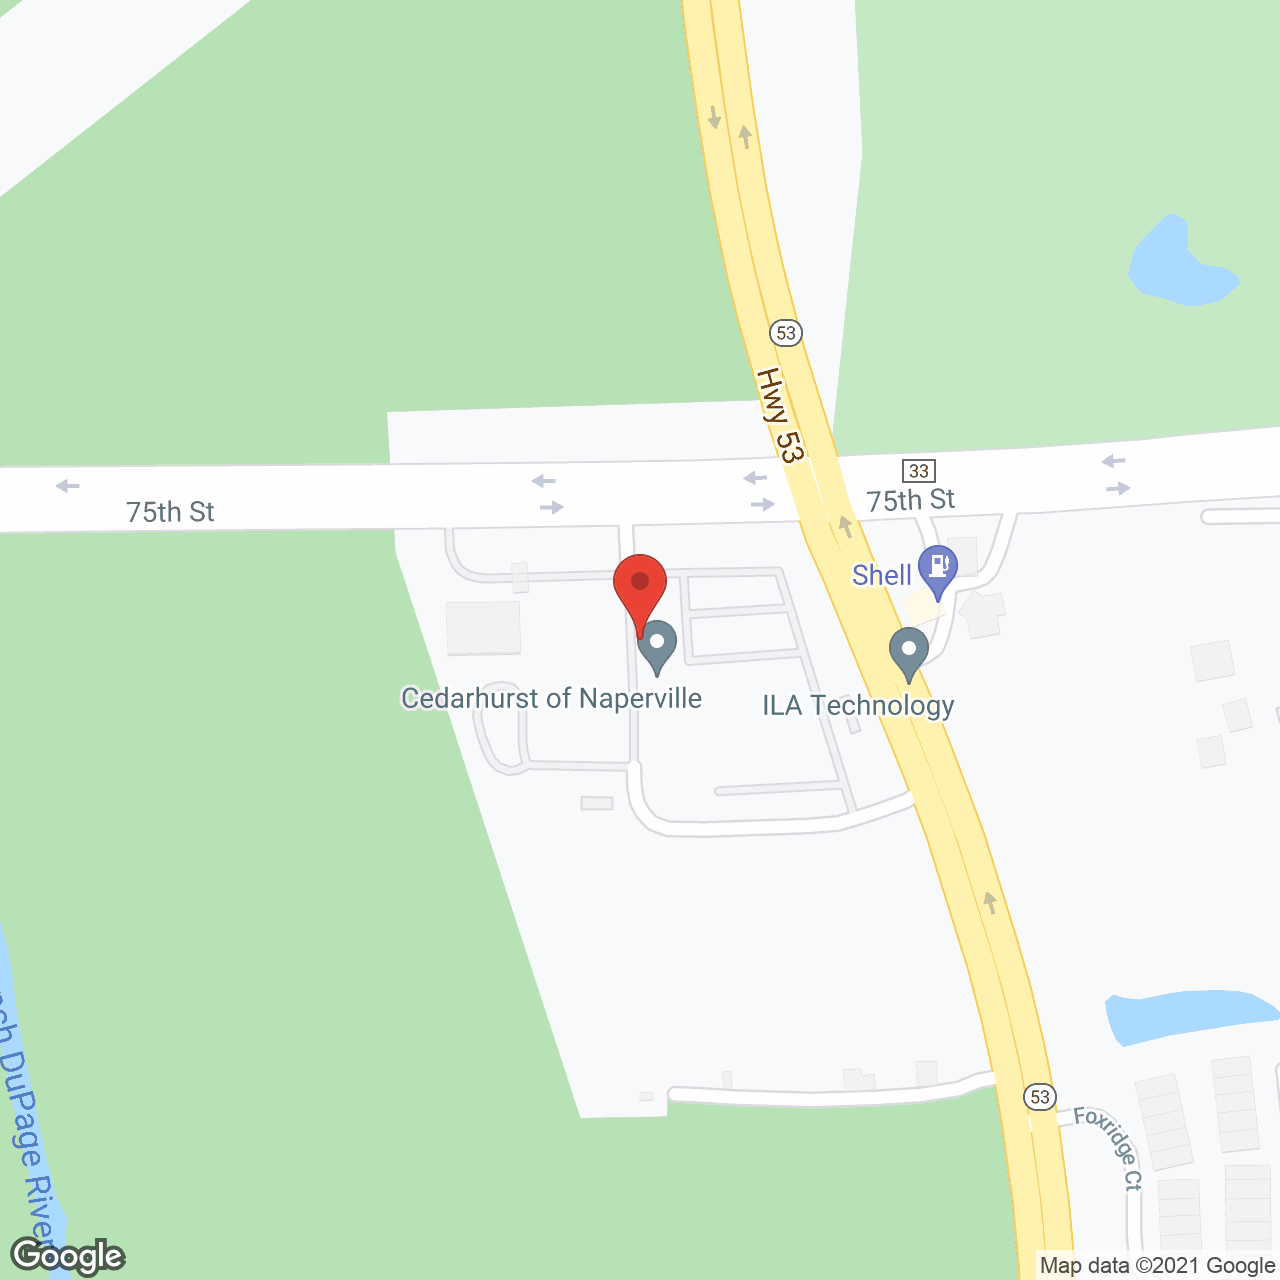 Cedarhurst of Naperville in google map